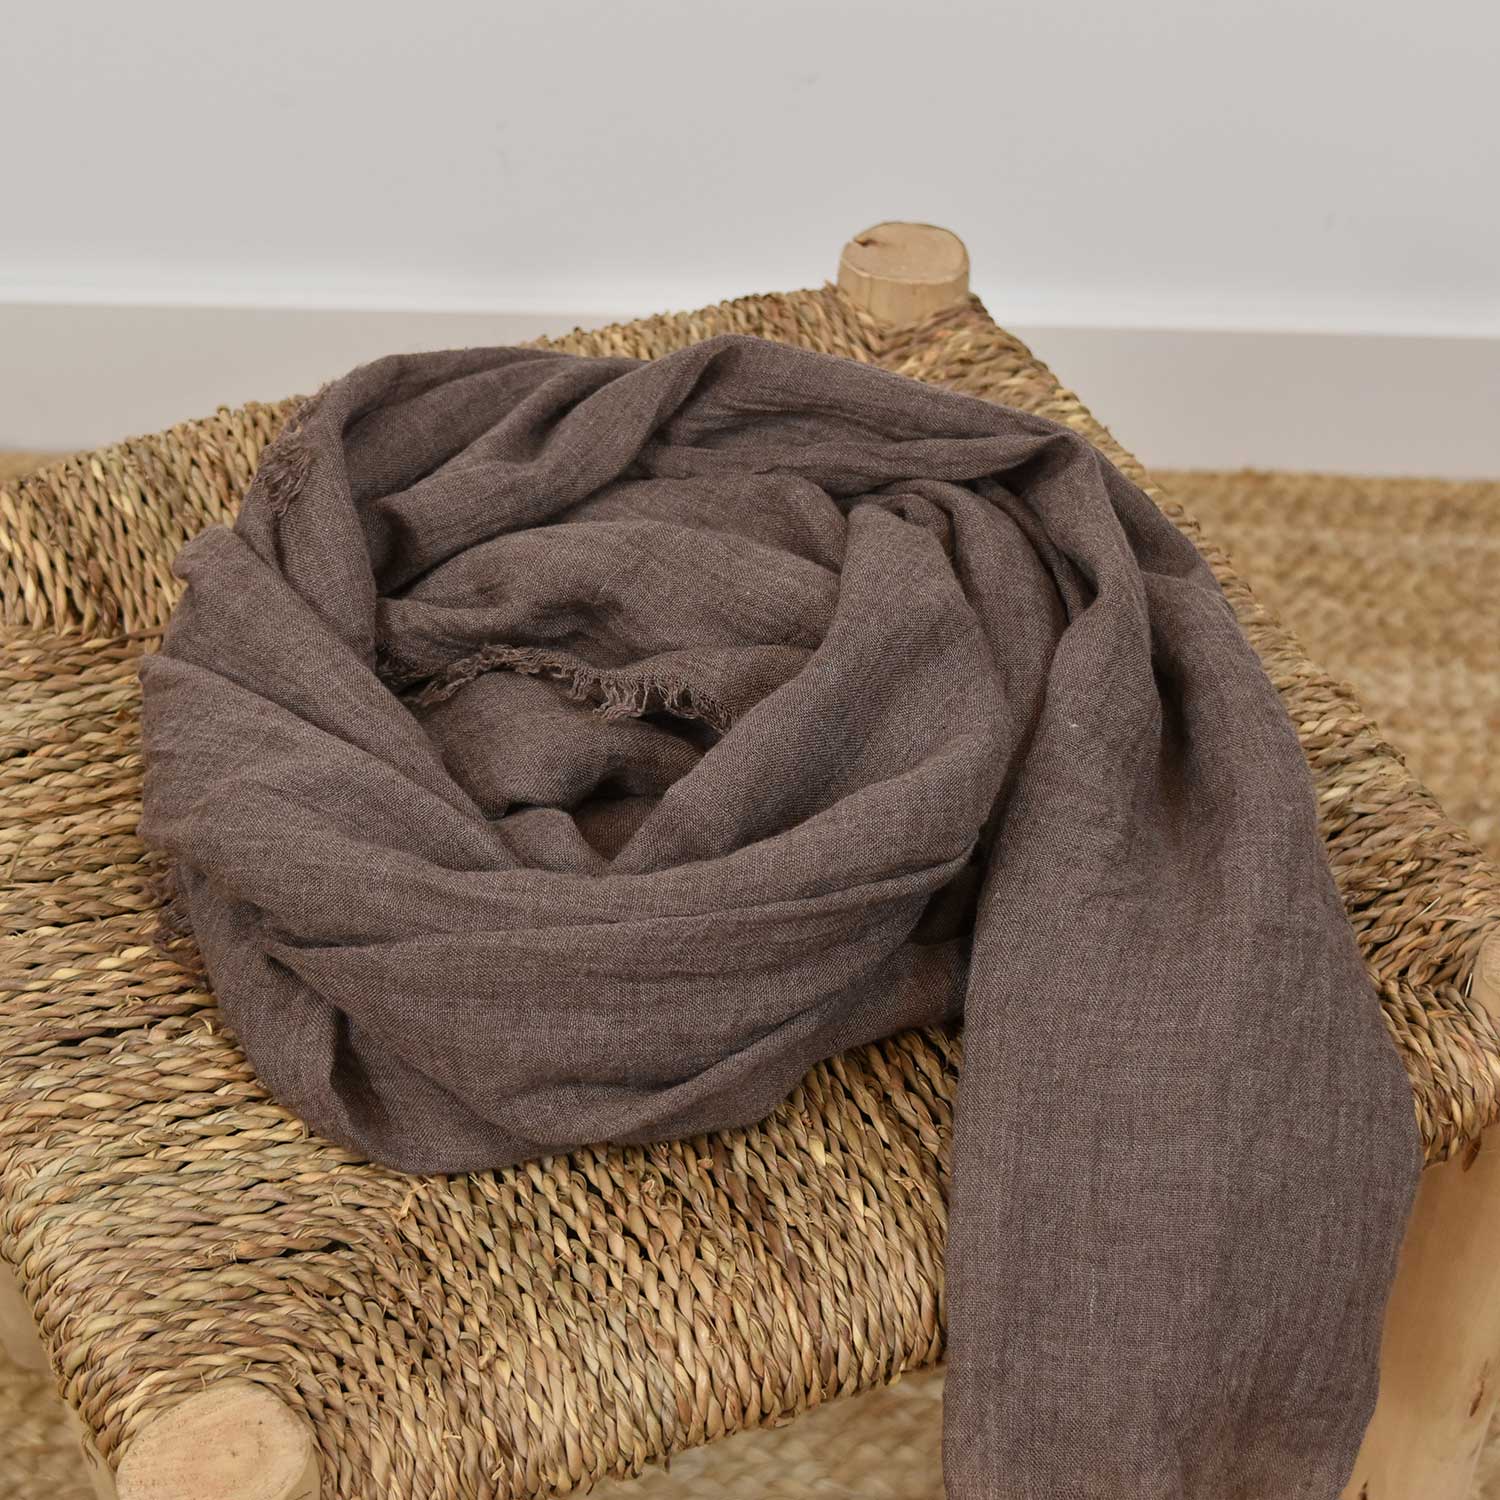 Brown Plain frayed scarf